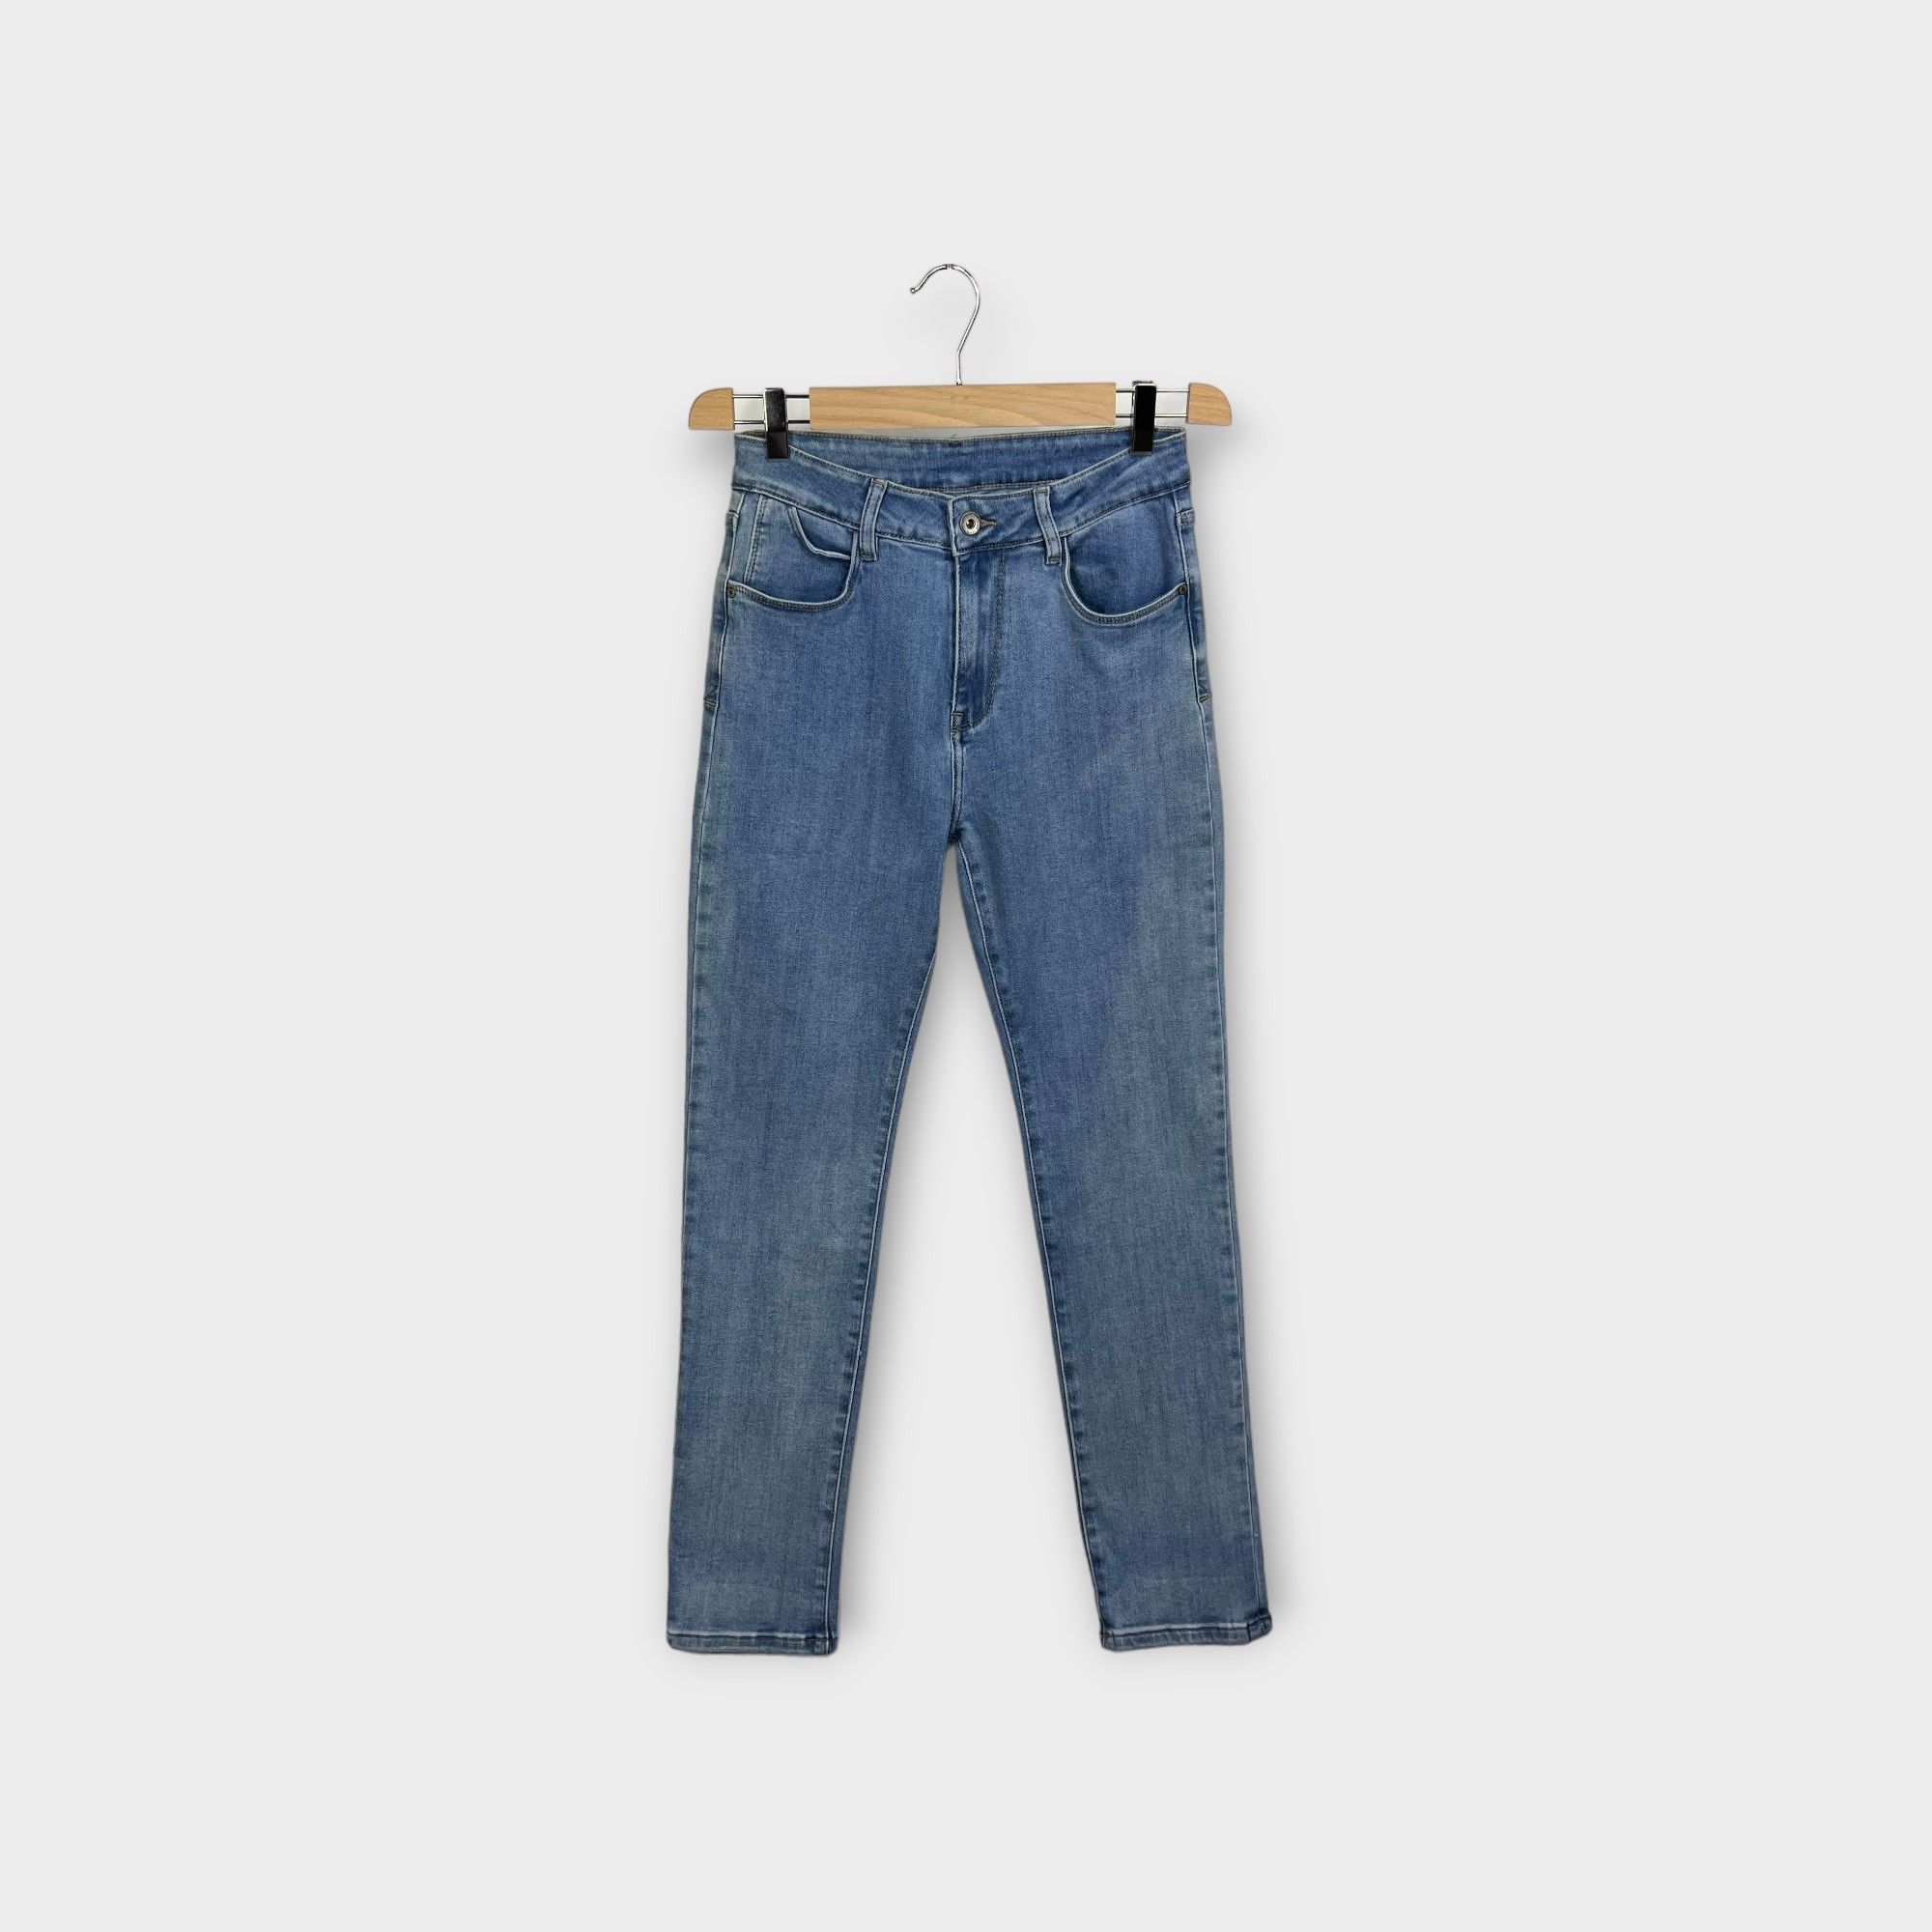 images/virtuemart/product/HELLEH Jeans donna modello carota in tela di cotone super light colore denim 1.jpg